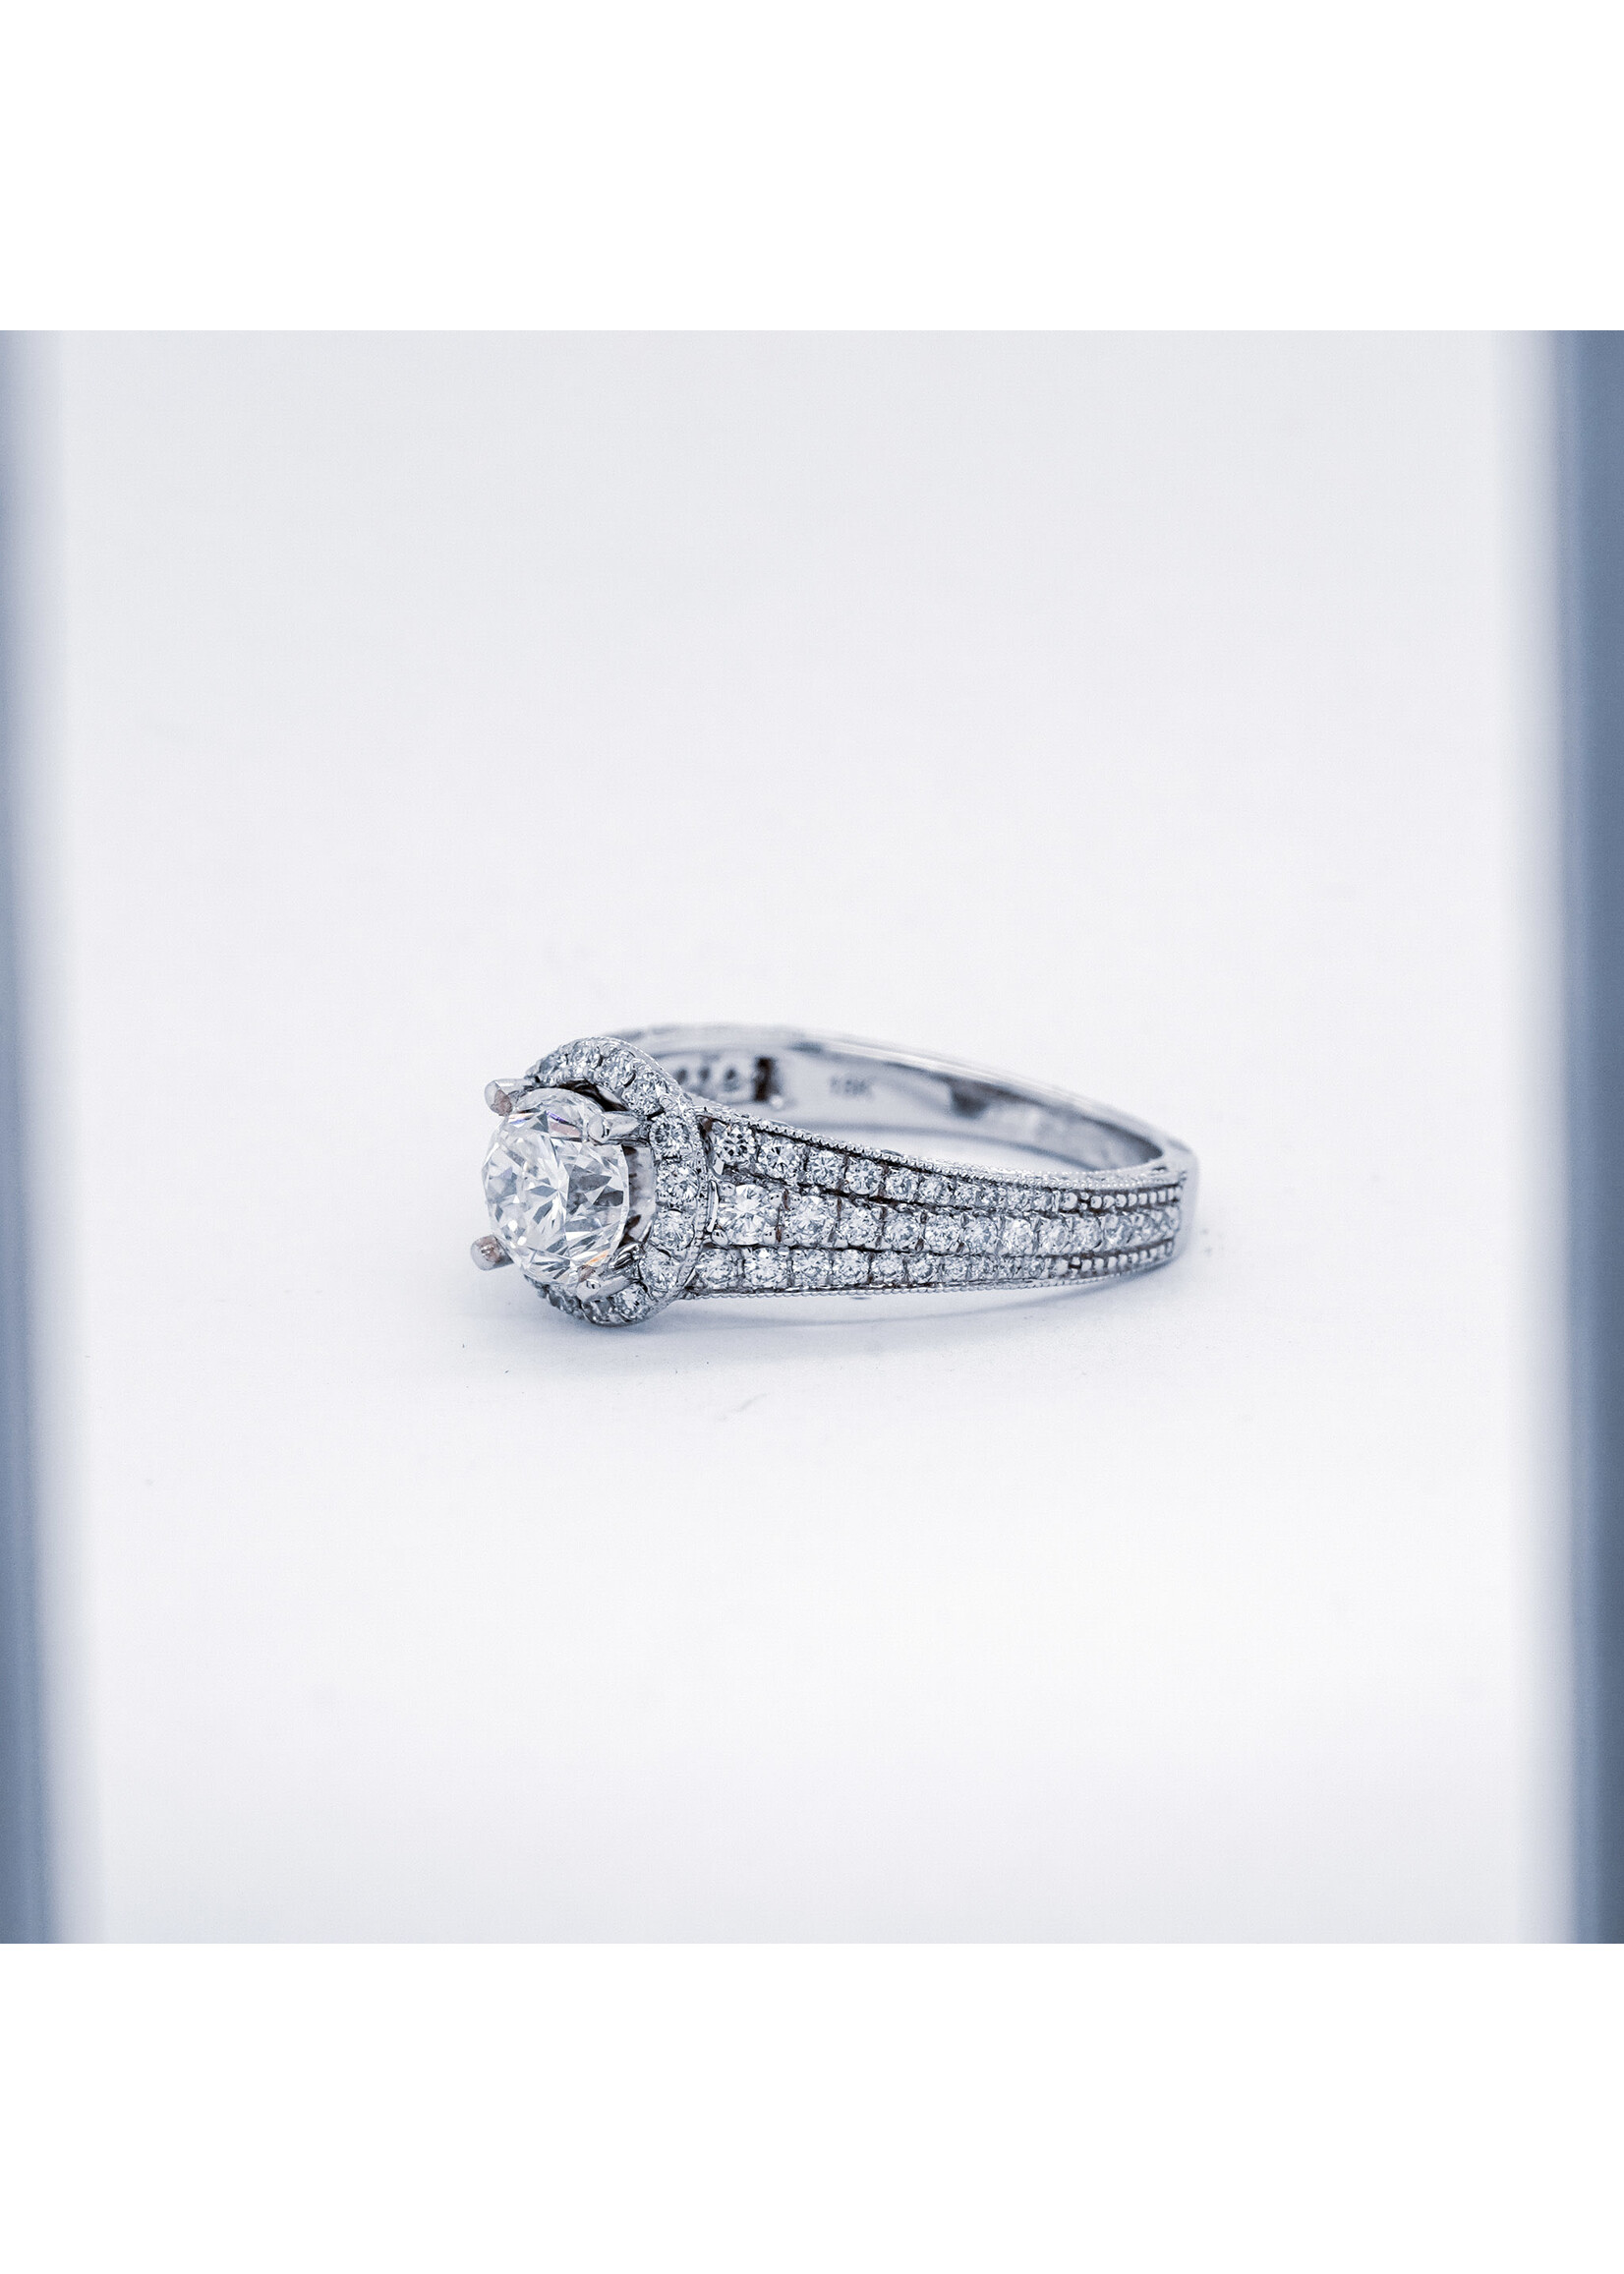 18KW 3.57g 1.75ctw (1.01ct) G/SI1 Round Diamond Halo Engagement Ring (size 6.5)